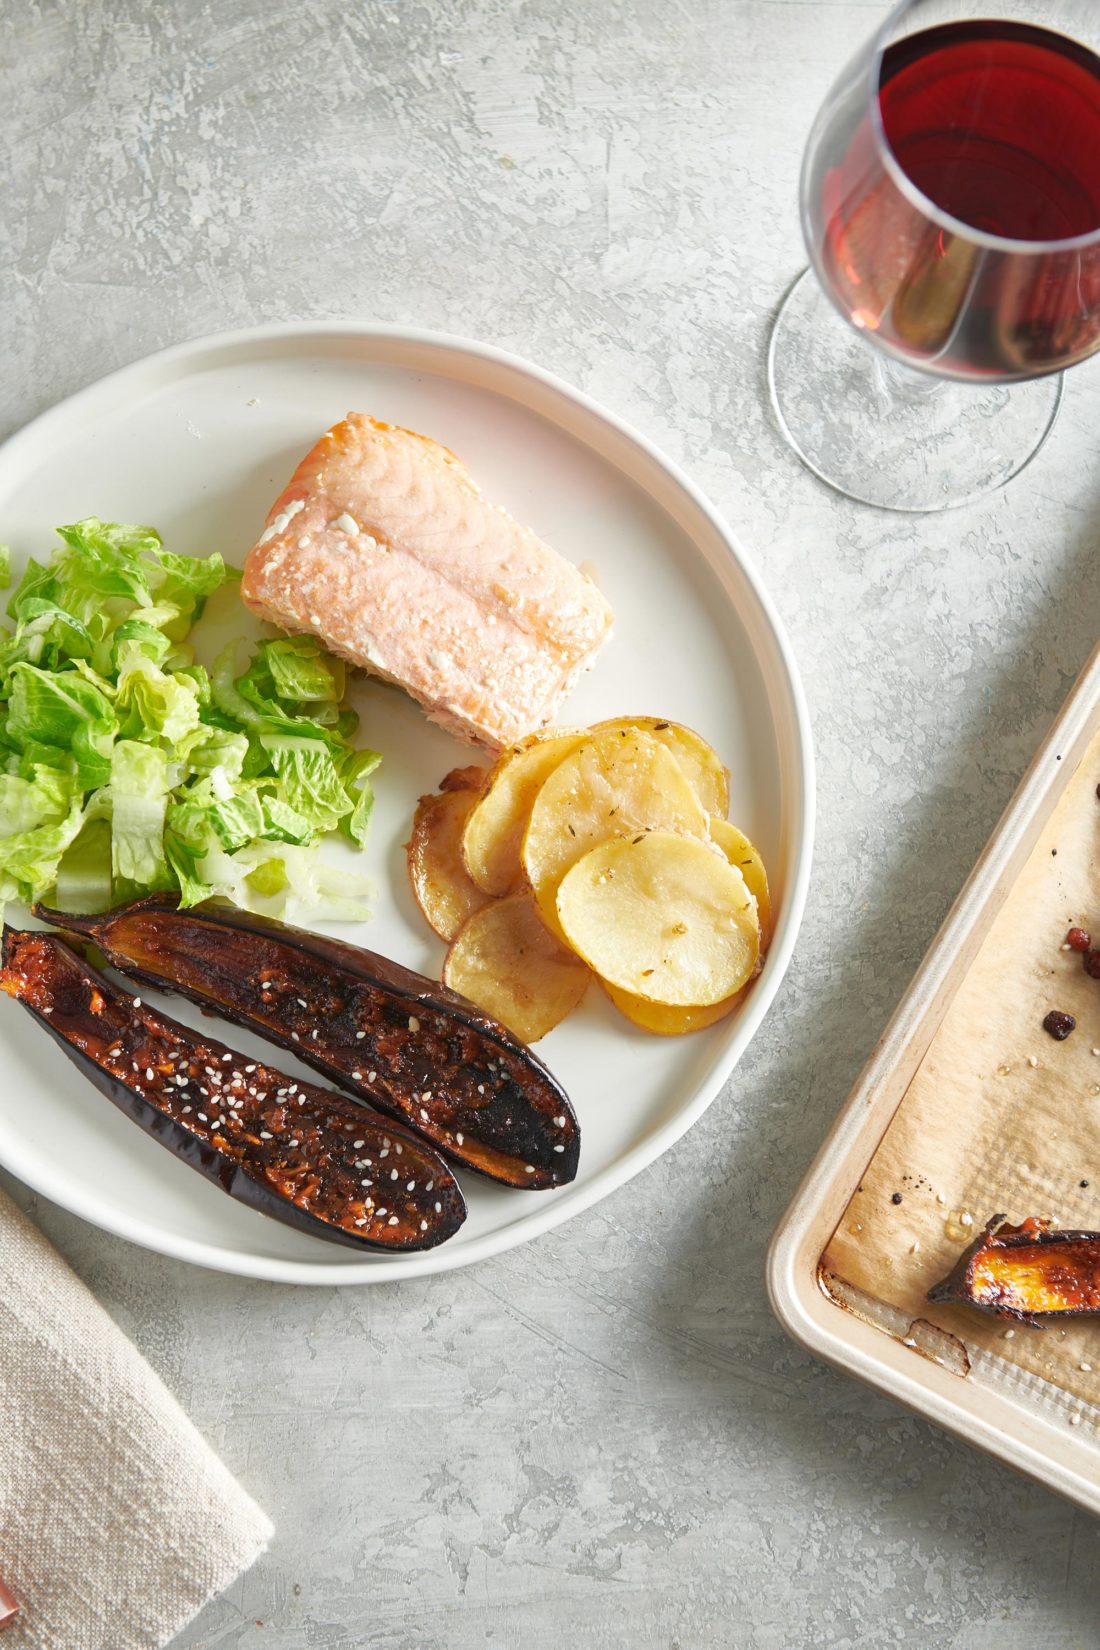 Plate of Japanese Miso Eggplant, fish, potato, and salad.